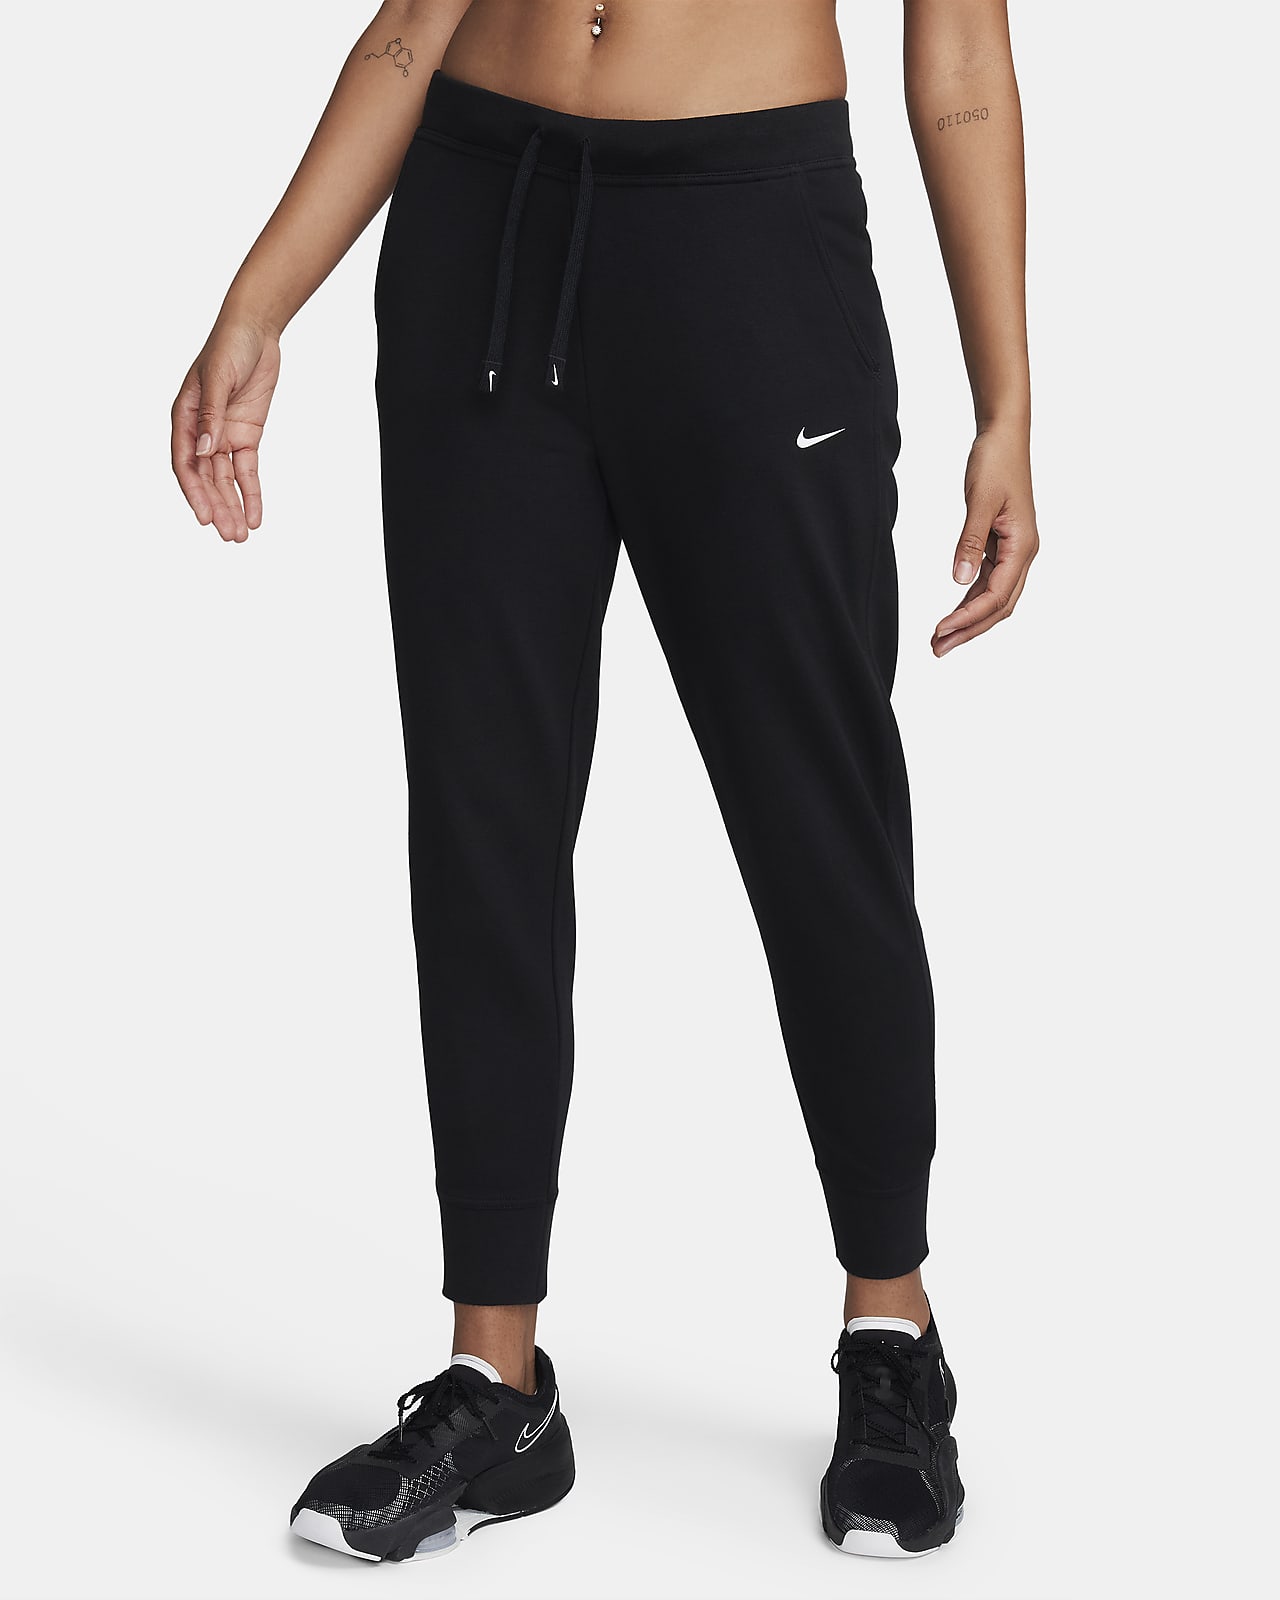 Nike Dri-FIT Get Fit Women's Training Pants. Nike.com